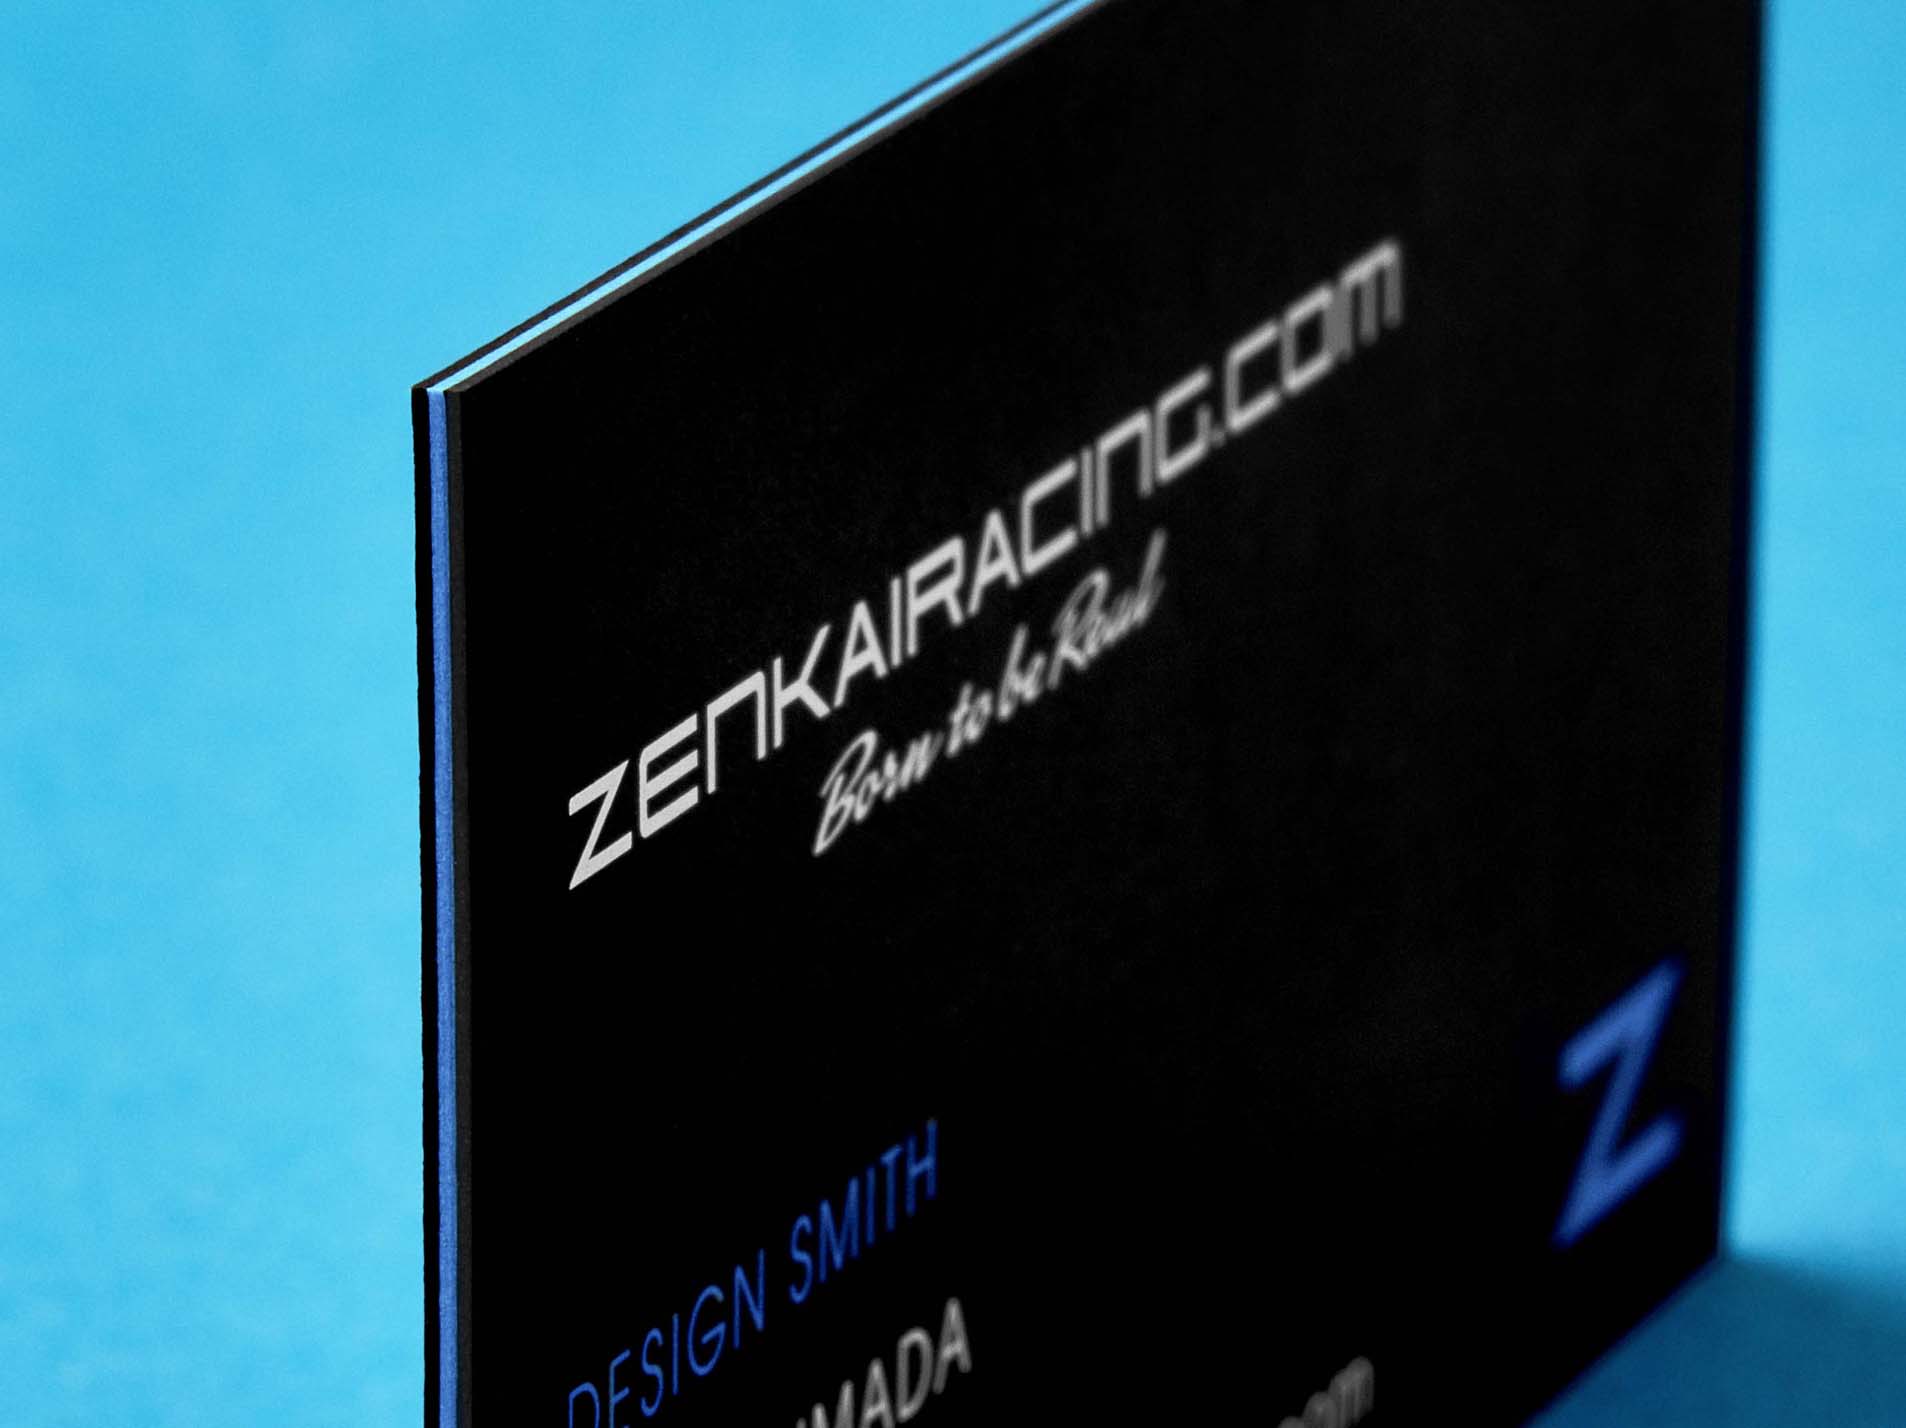 zenkairacing.com branding